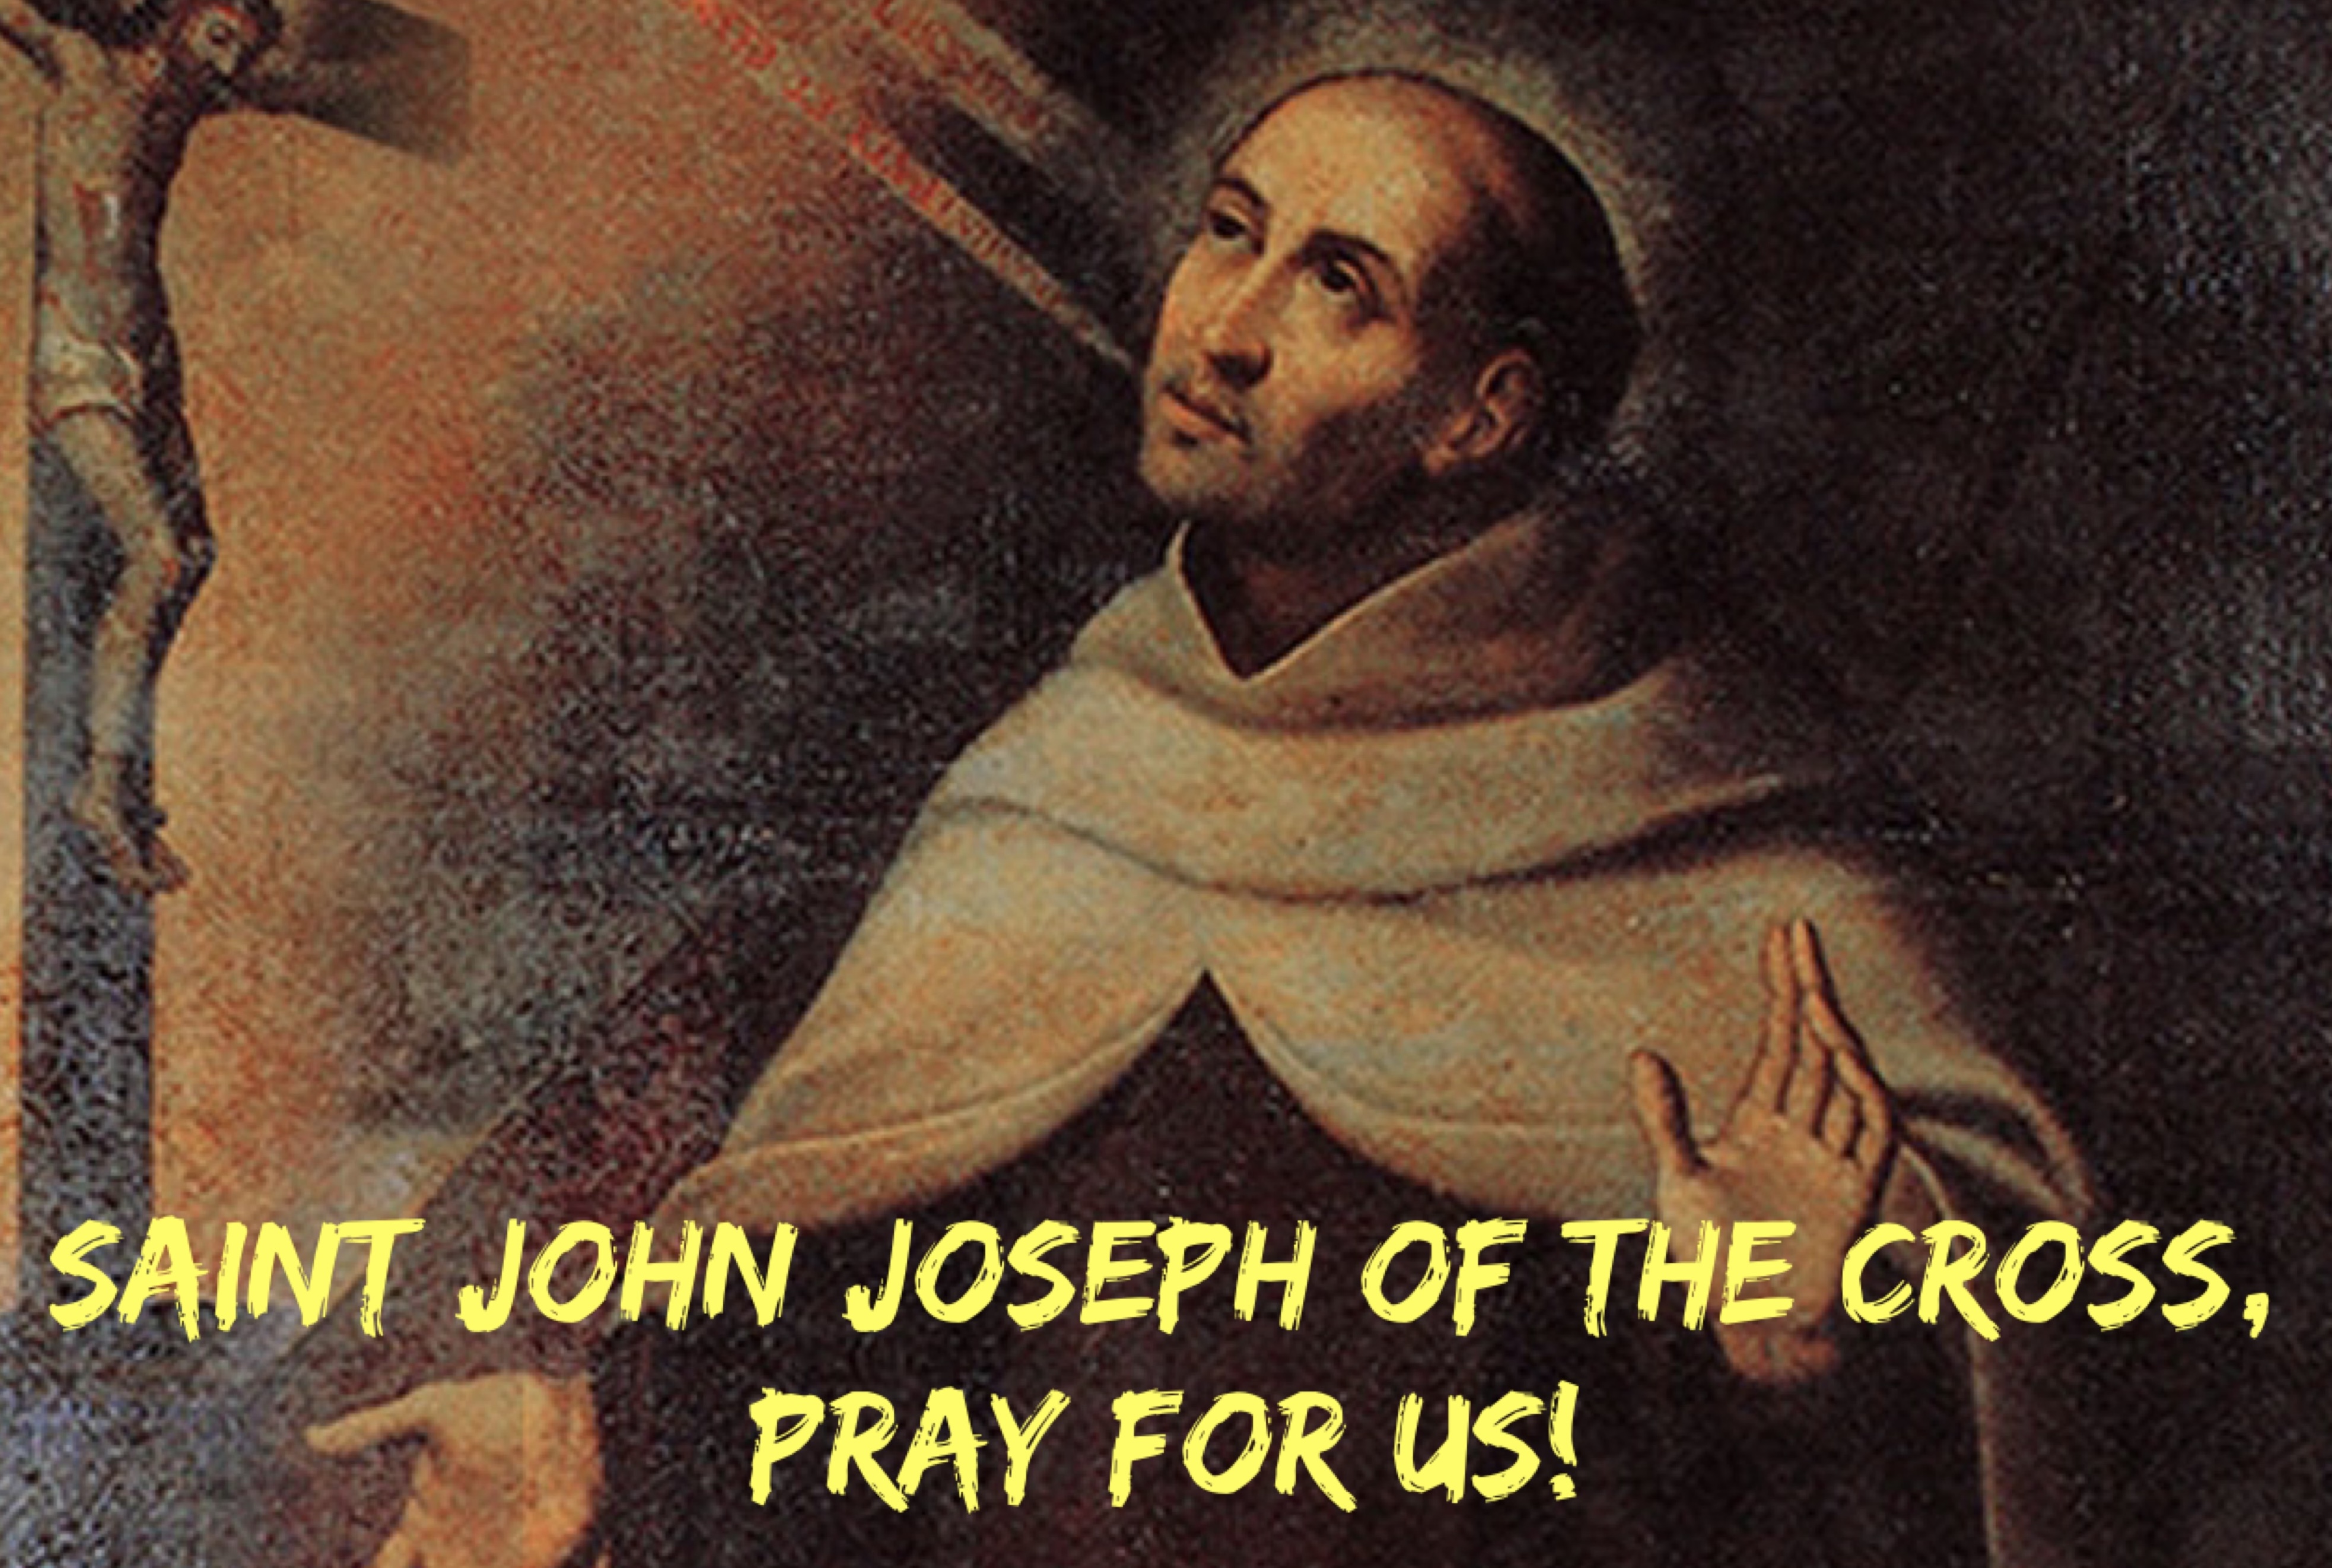 5th March - Saint John Joseph of the Cross